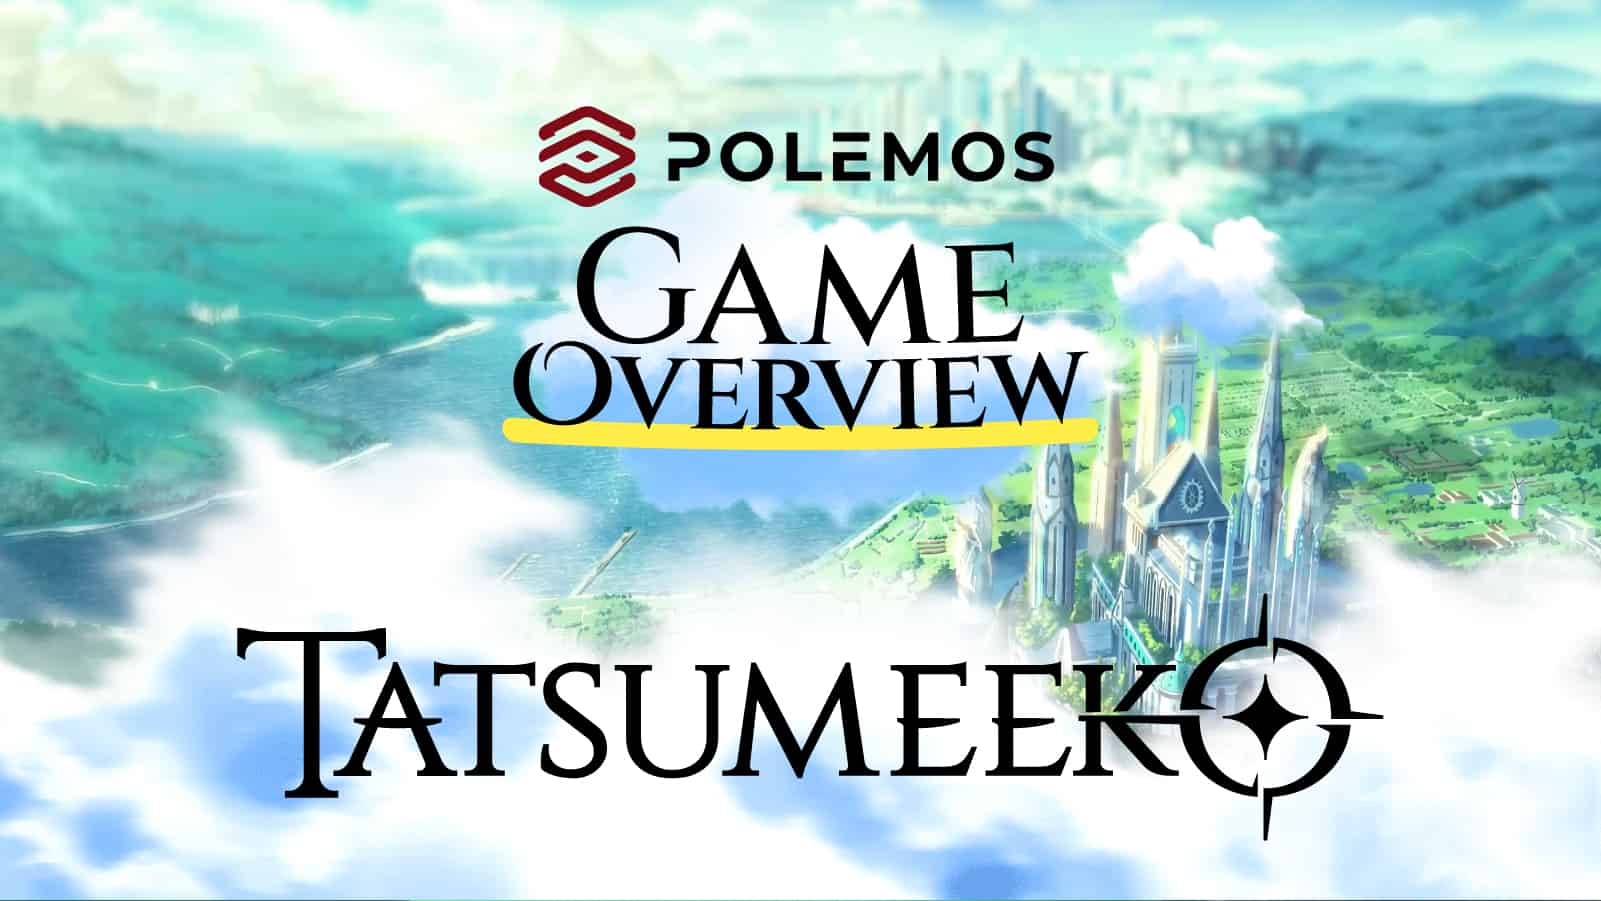 Tatsumeeko Game Overview